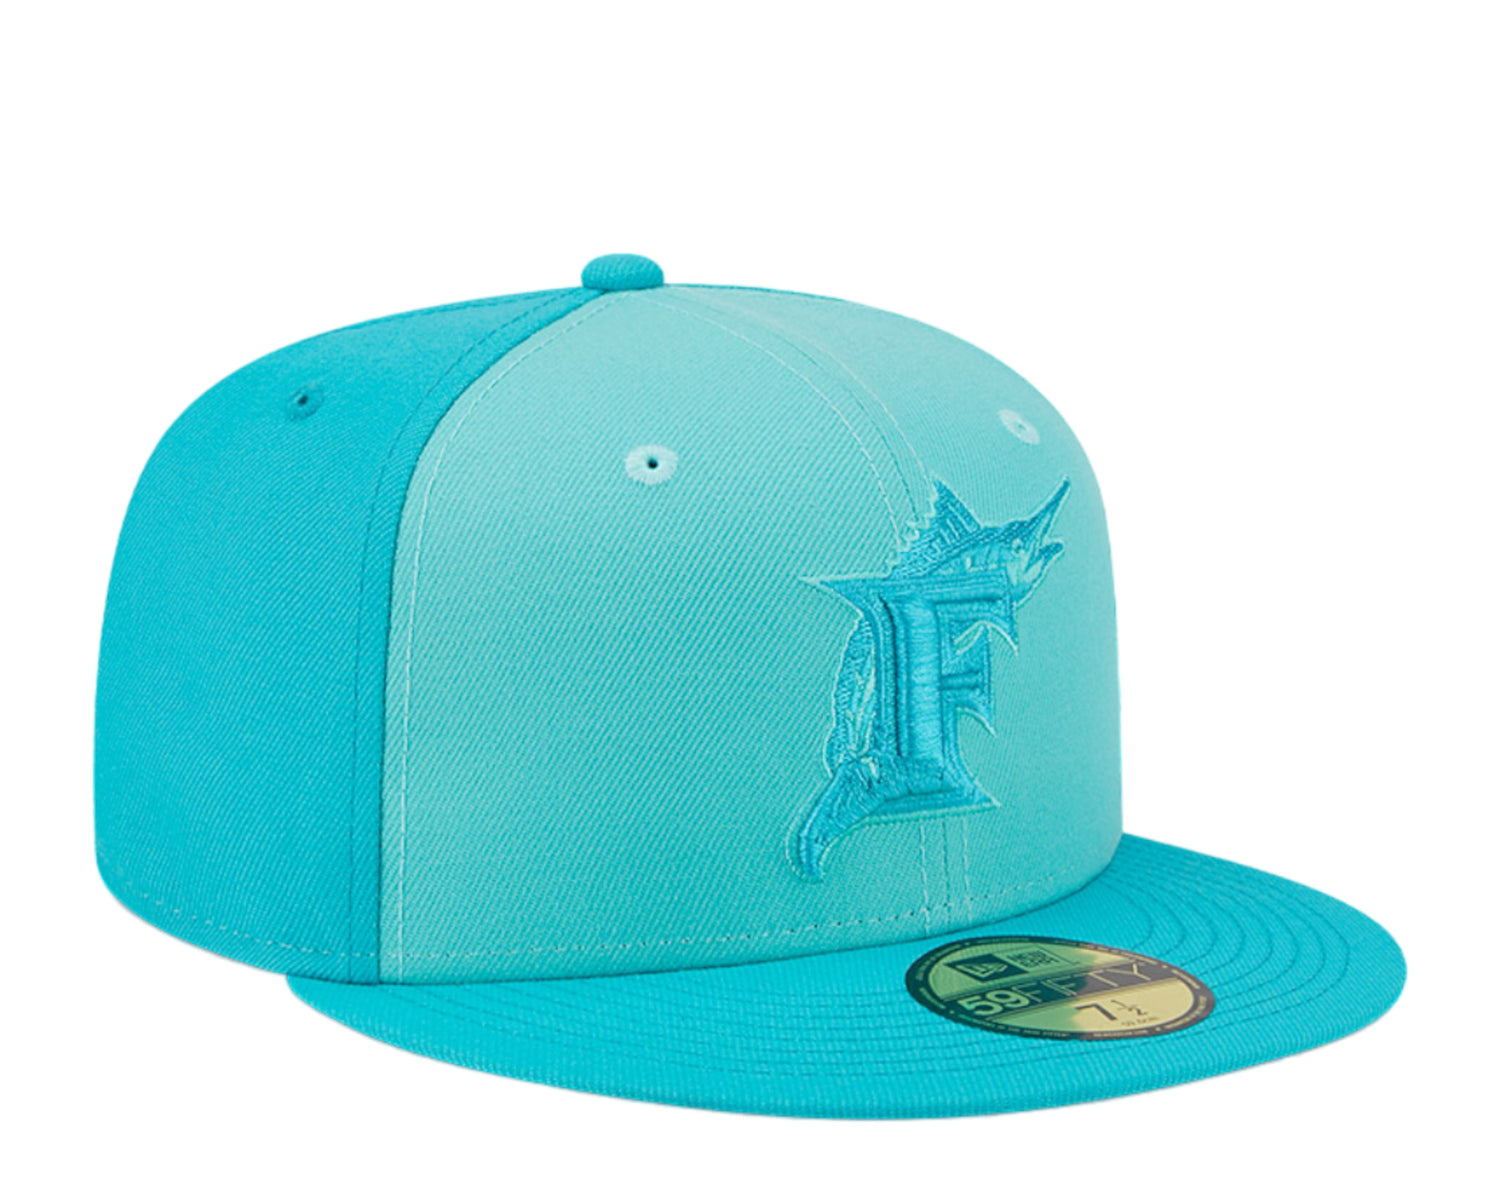 New Era 59Fifty MLB Miami Marlins Tri-Tone Team Fitted Hat